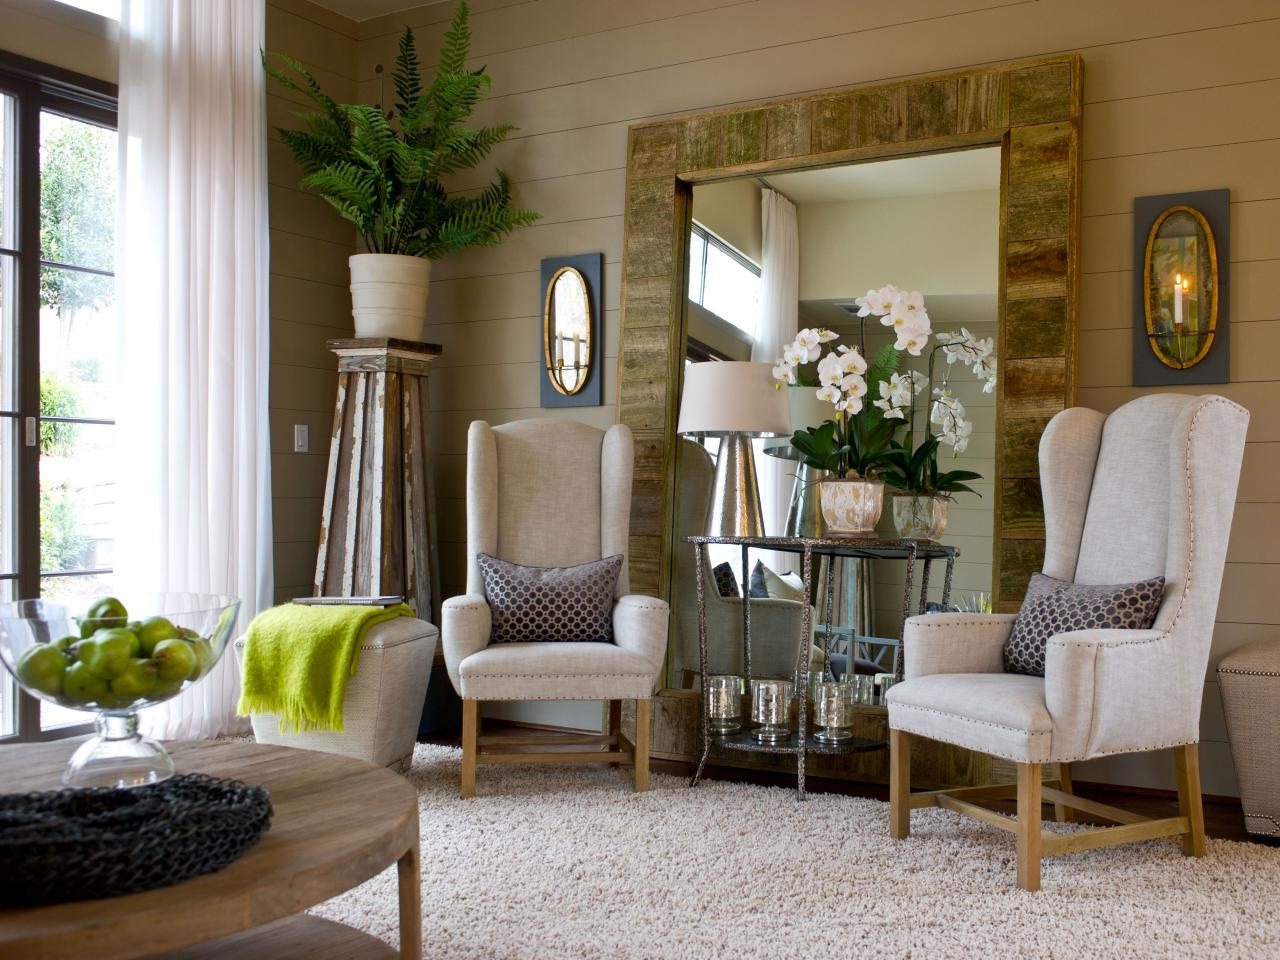 Interior Design for Living Rooms Sitting Room Ideas | Roy Home Design